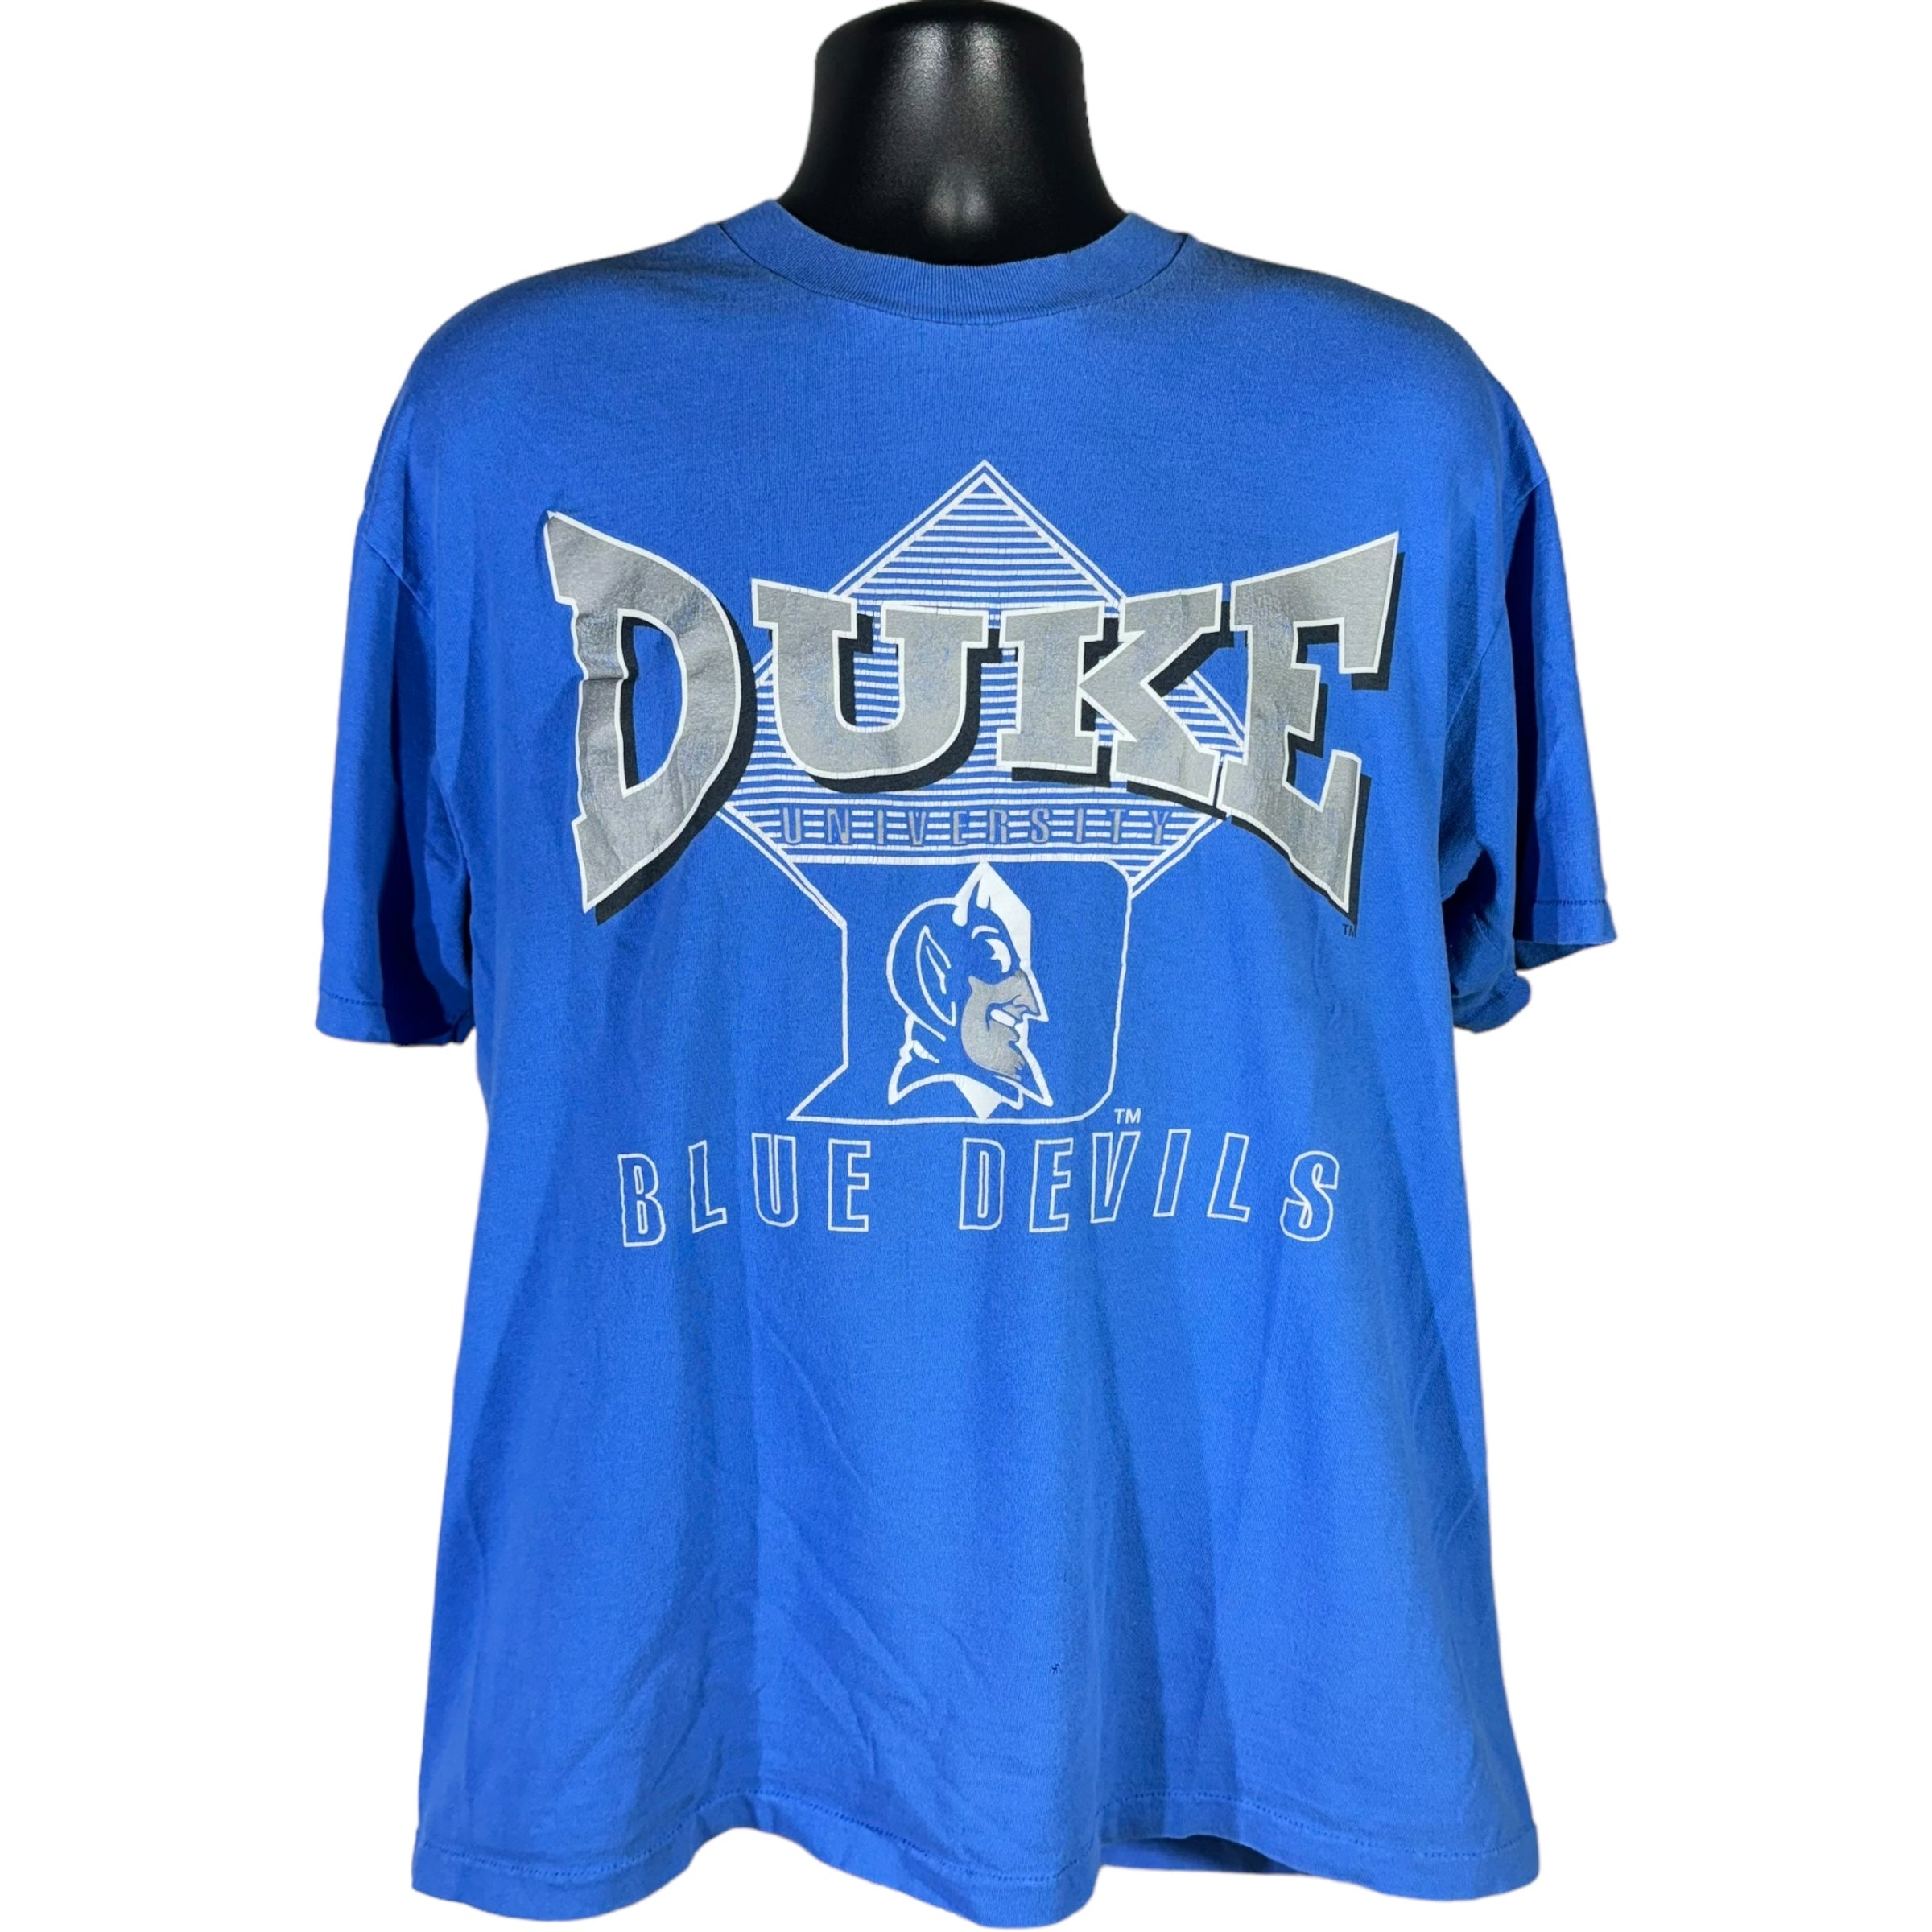 Vintage Duke Blue Devils Tee 90s